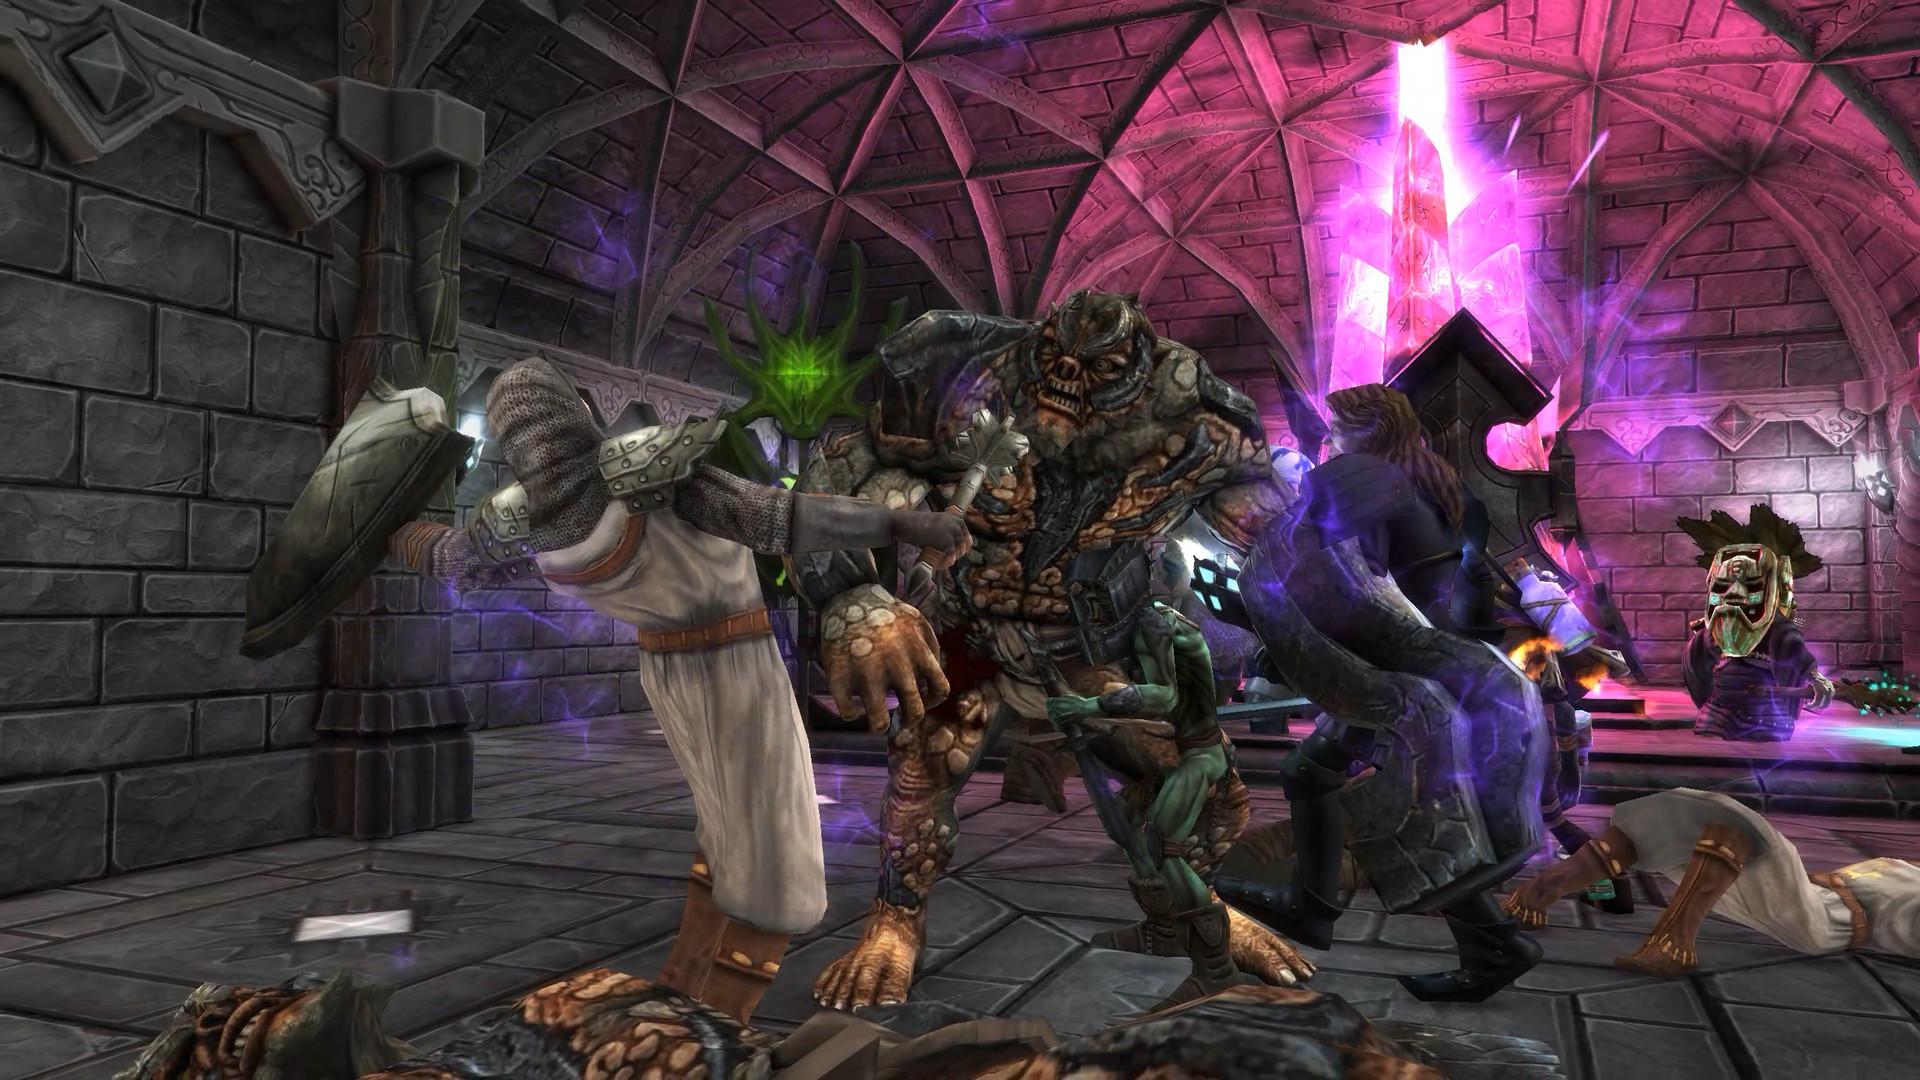 Screenshot №10 from game War for the Overworld